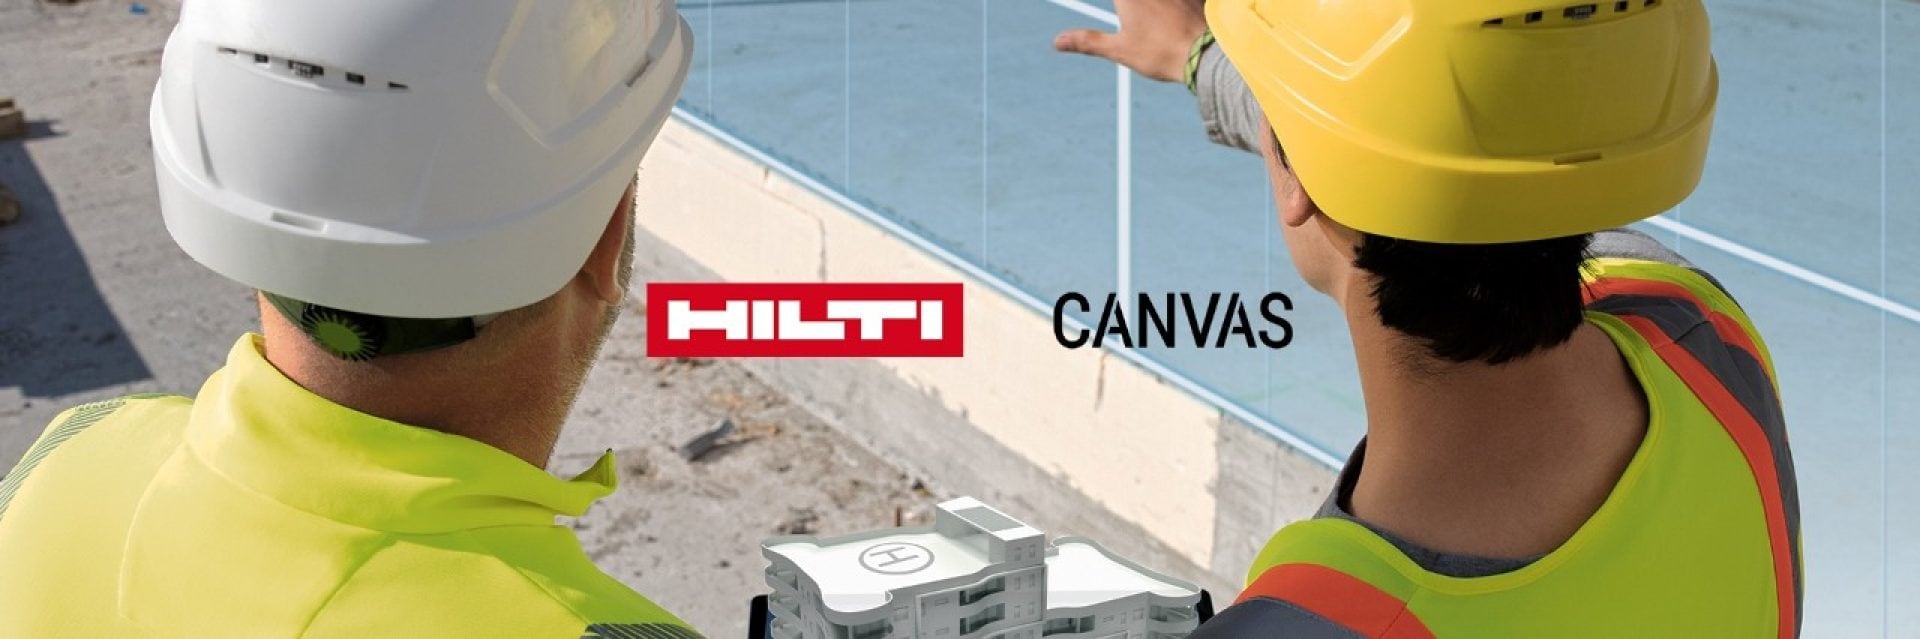 Hilti and Canvas Partnership